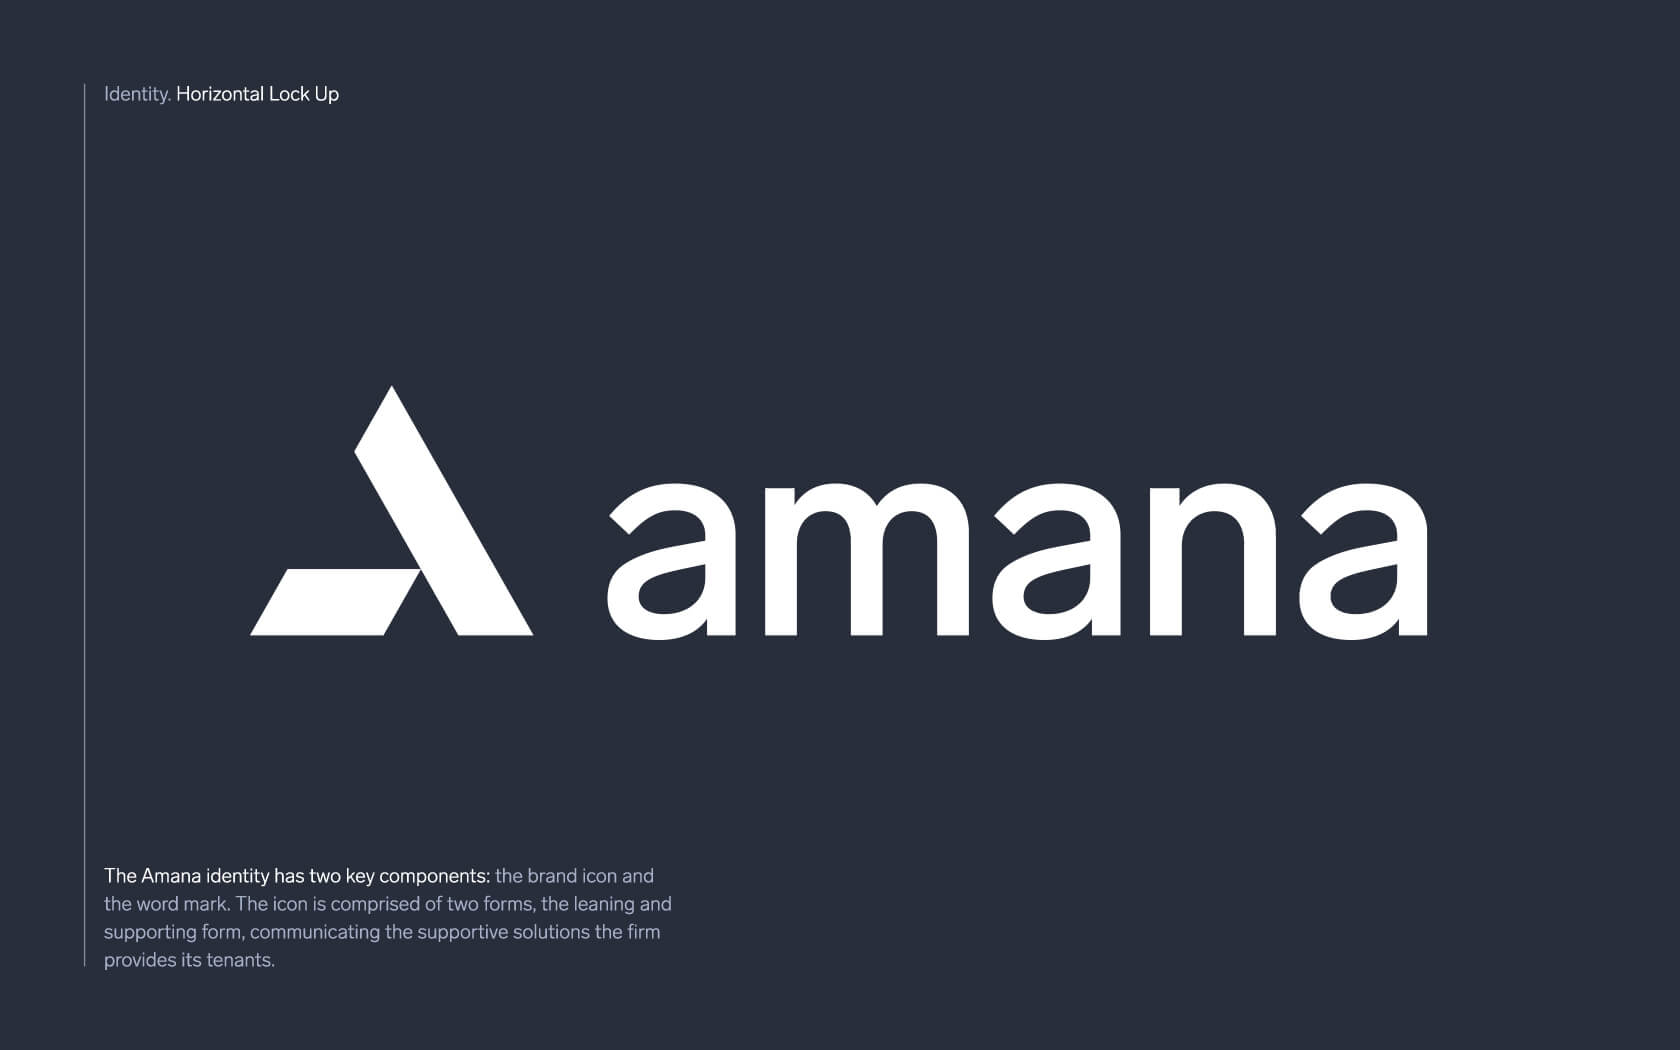 Amana. Brand logo in white with brand description